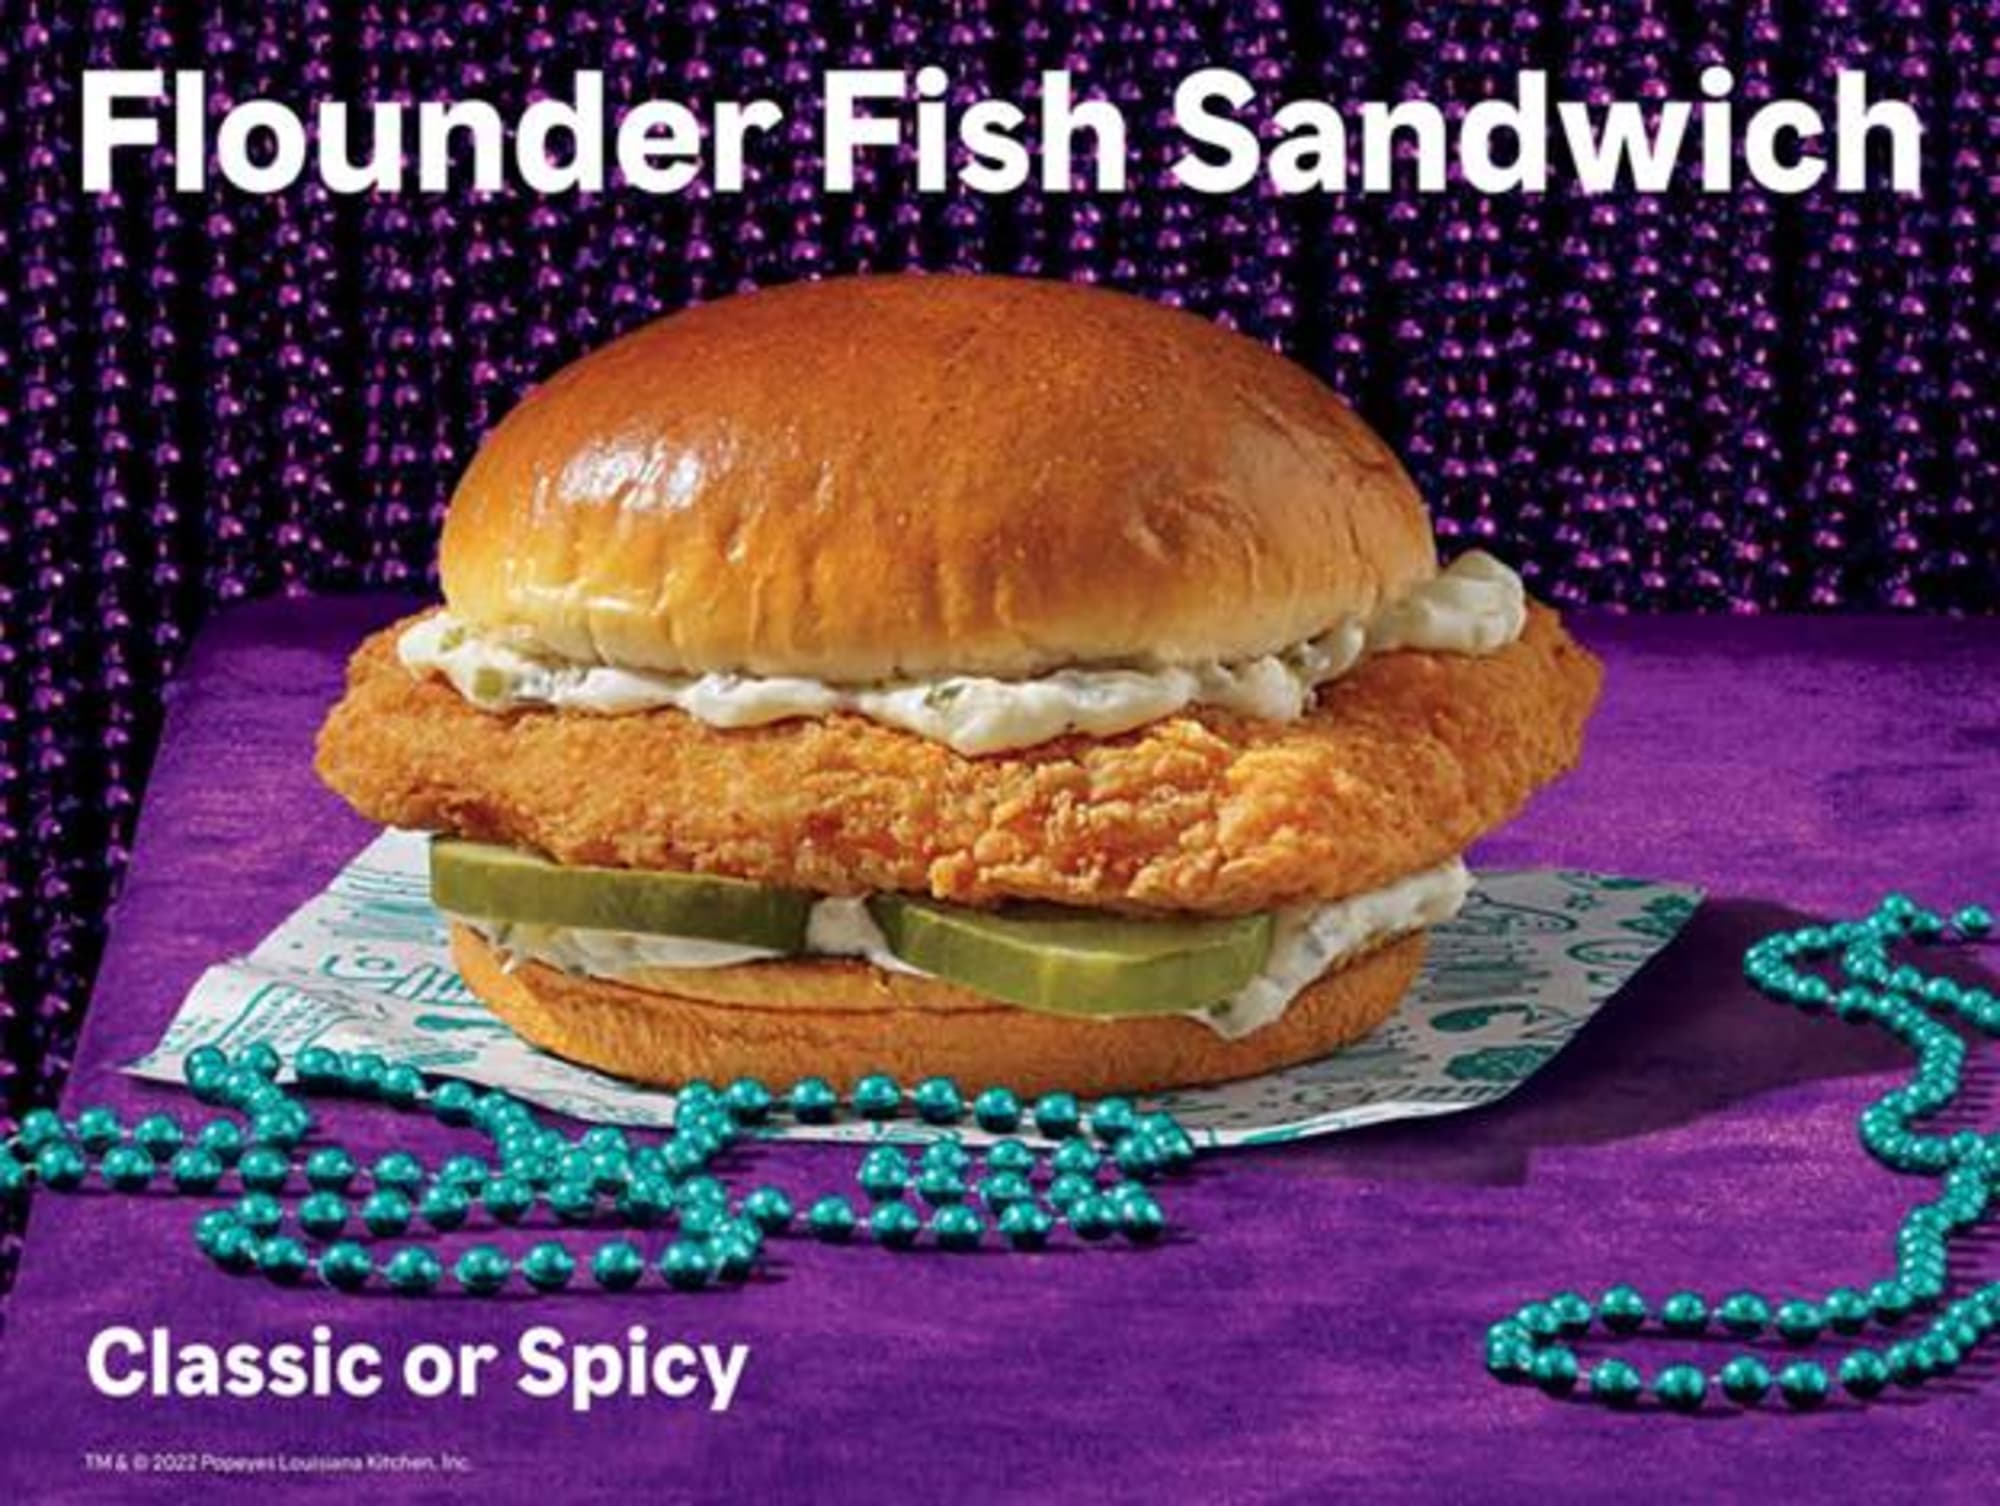 Popeyes Flounder Fish Sandwich gets a flavor upgrade